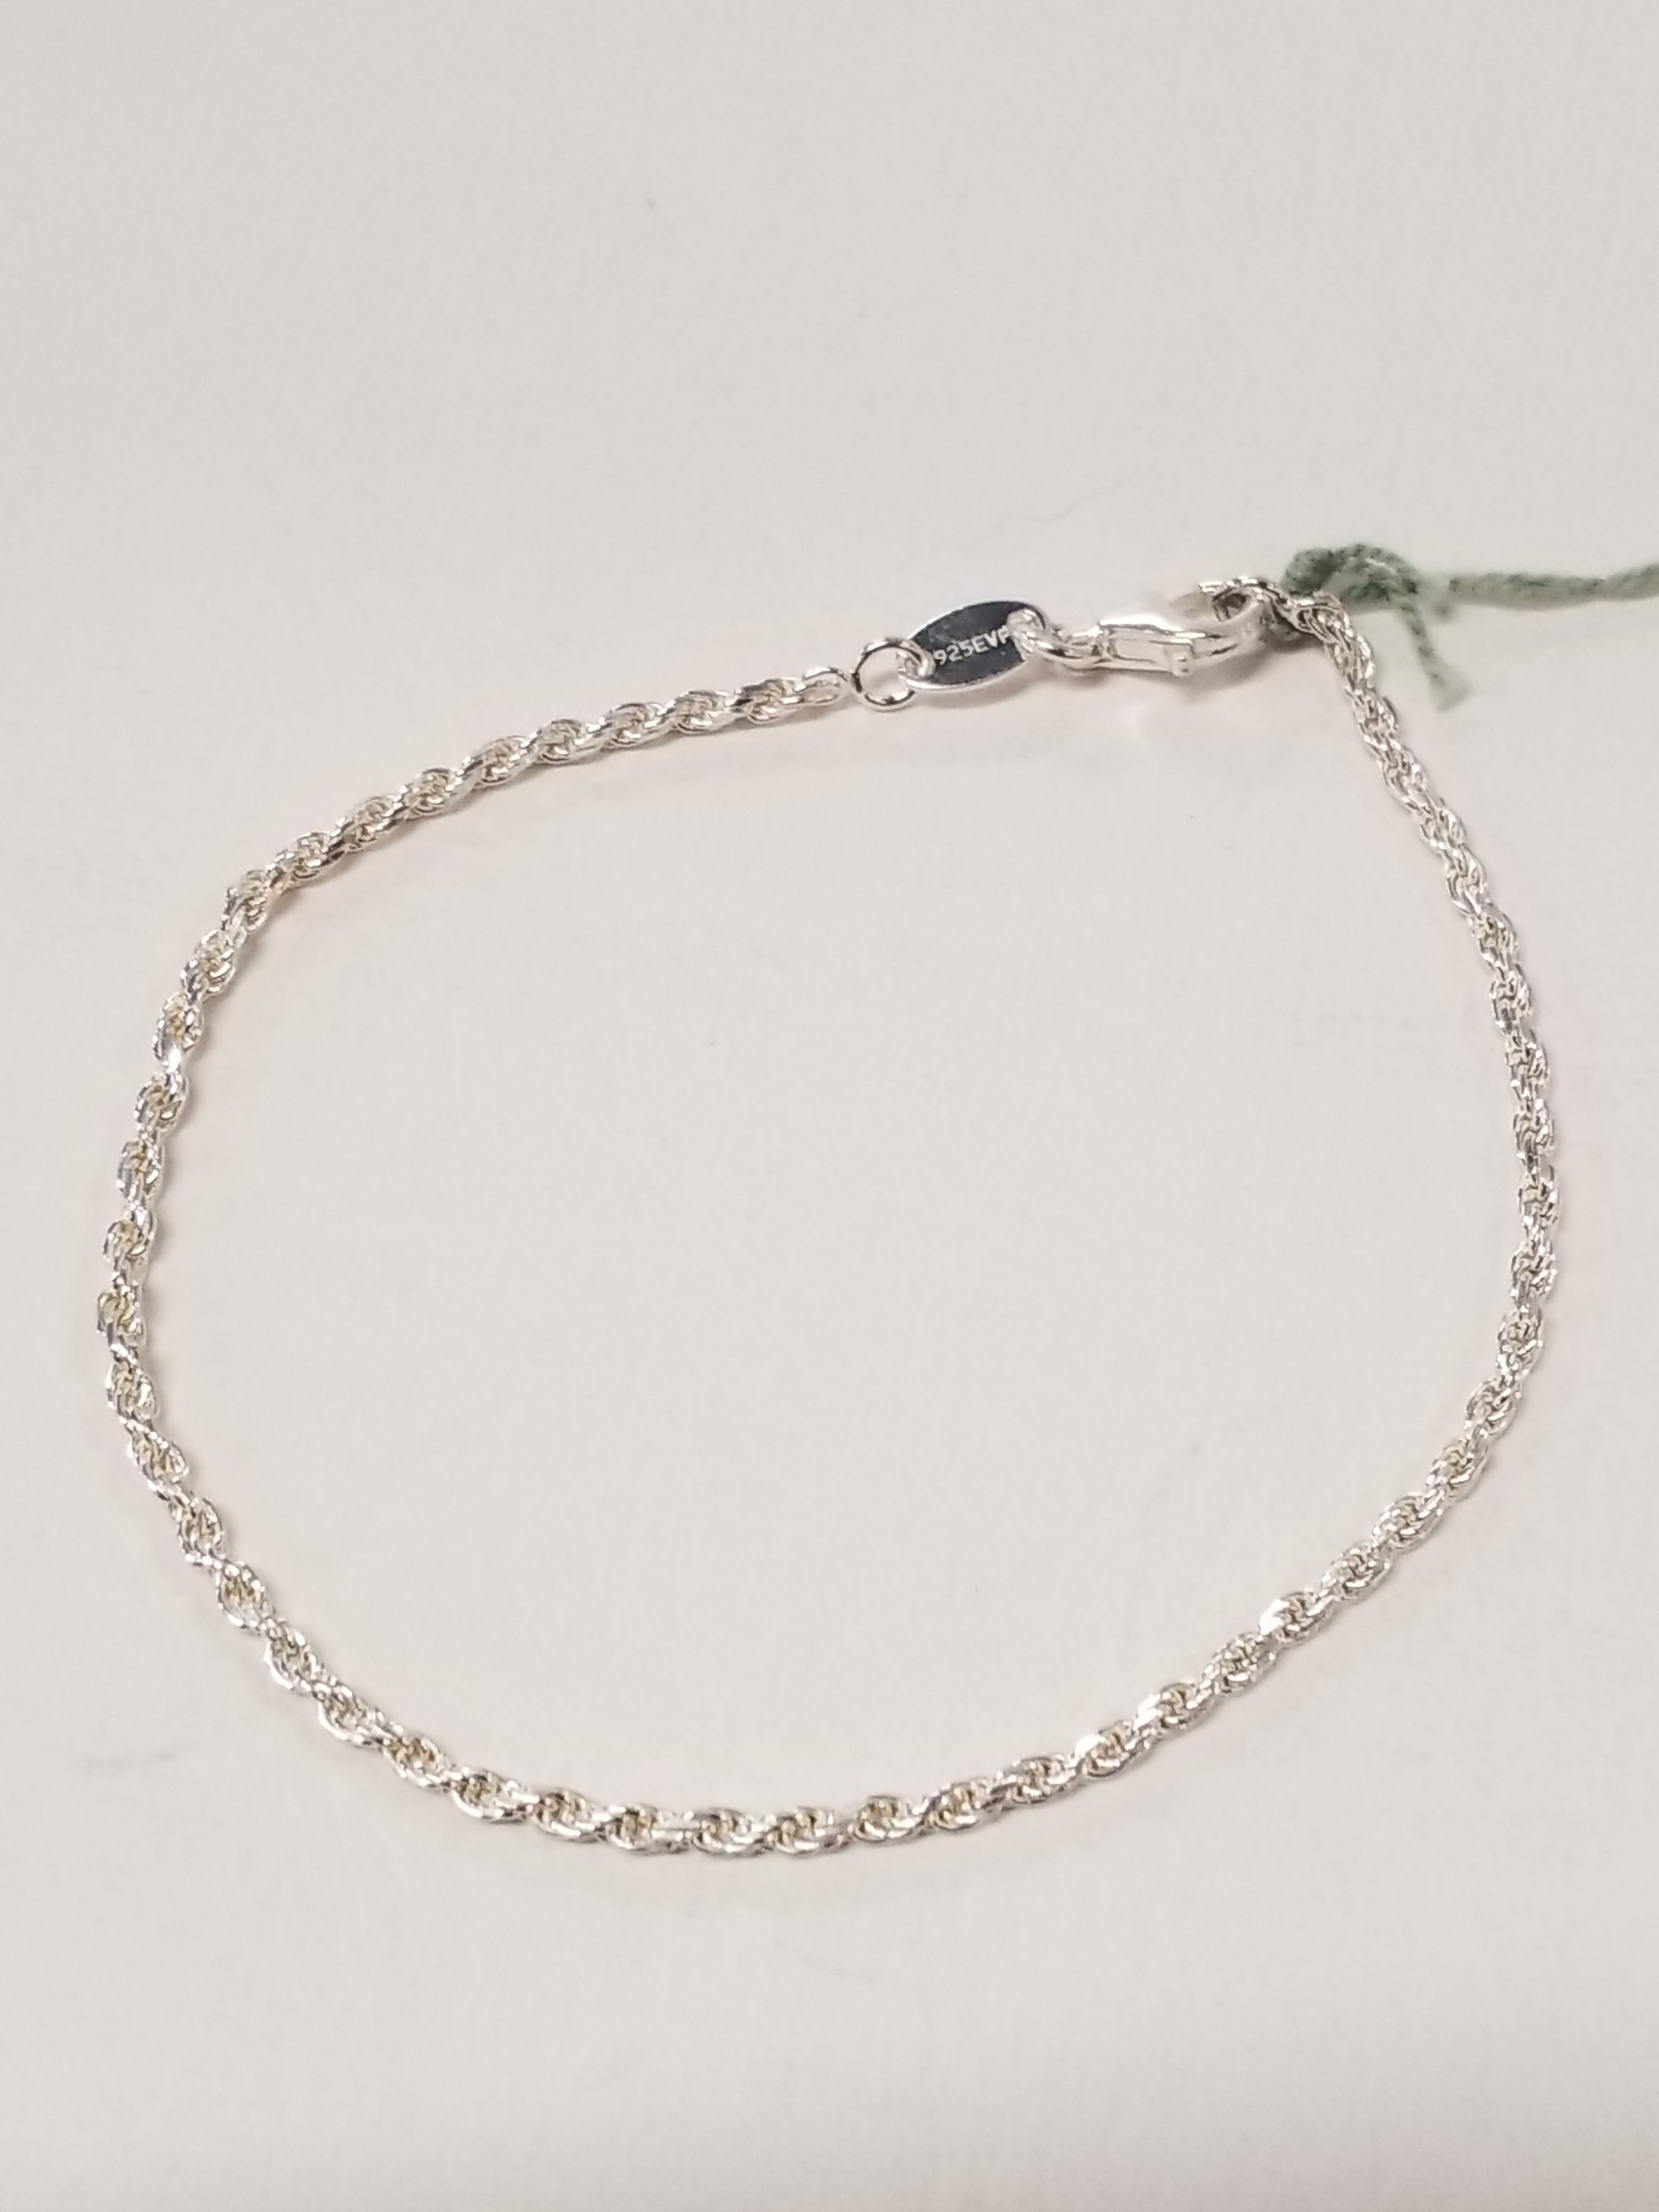 S/SBracelet Rope Style - Sterling Silver